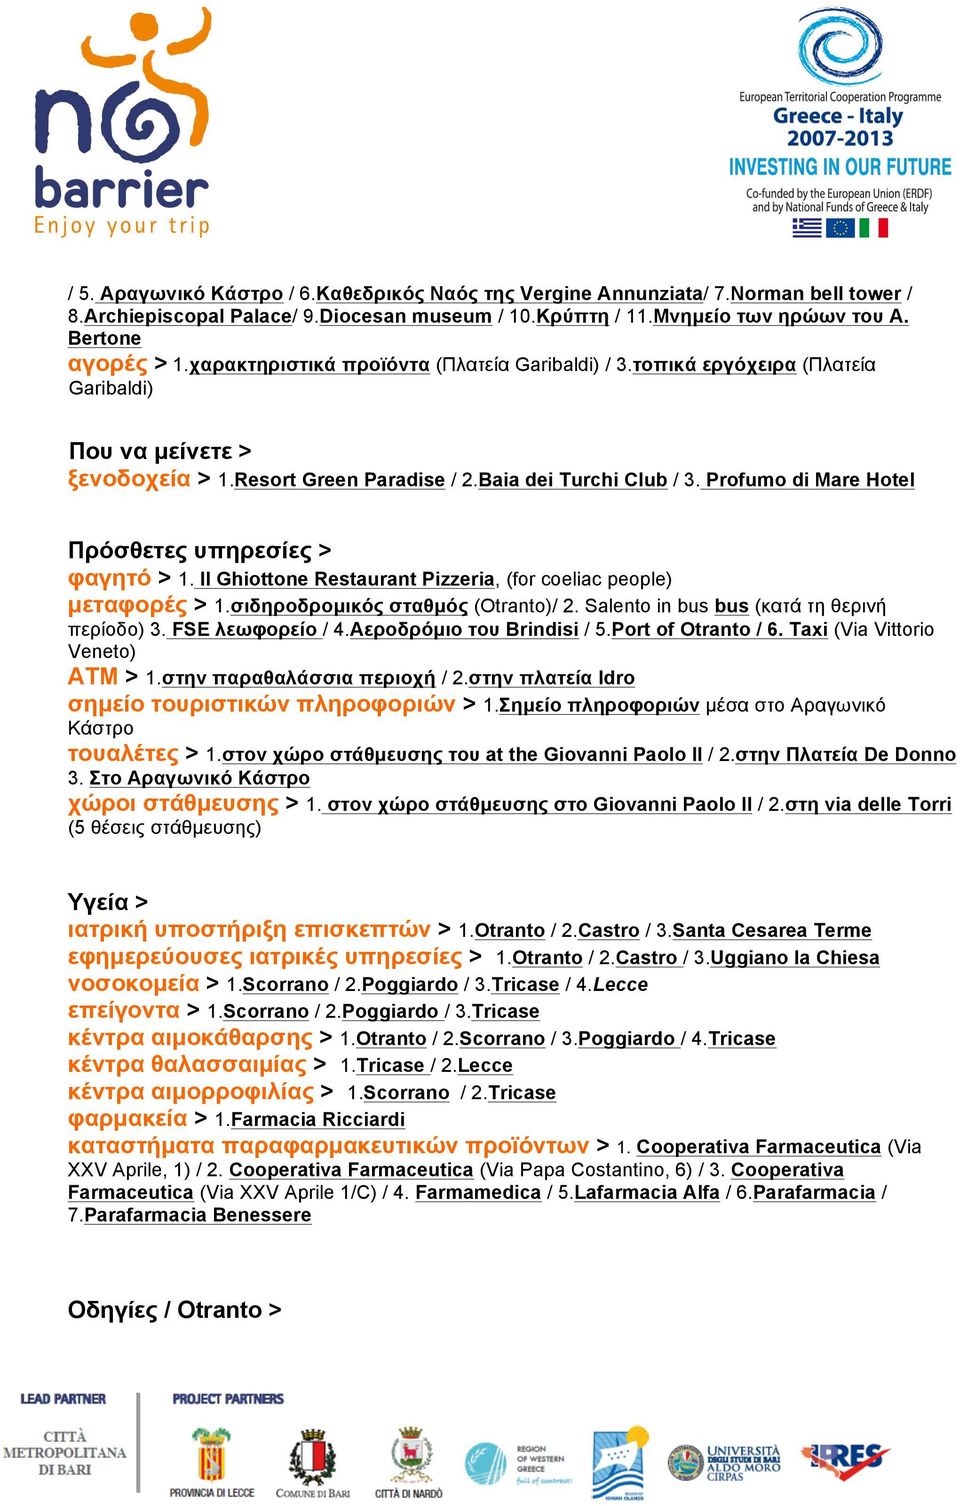 Profumo di Mare Hotel Πρόσθετες υπηρεσίες > φαγητό > 1. Il Ghiottone Restaurant Pizzeria, (for coeliac people) µεταφορές > 1.σιδηροδροµικός σταθµός (Otranto)/ 2.